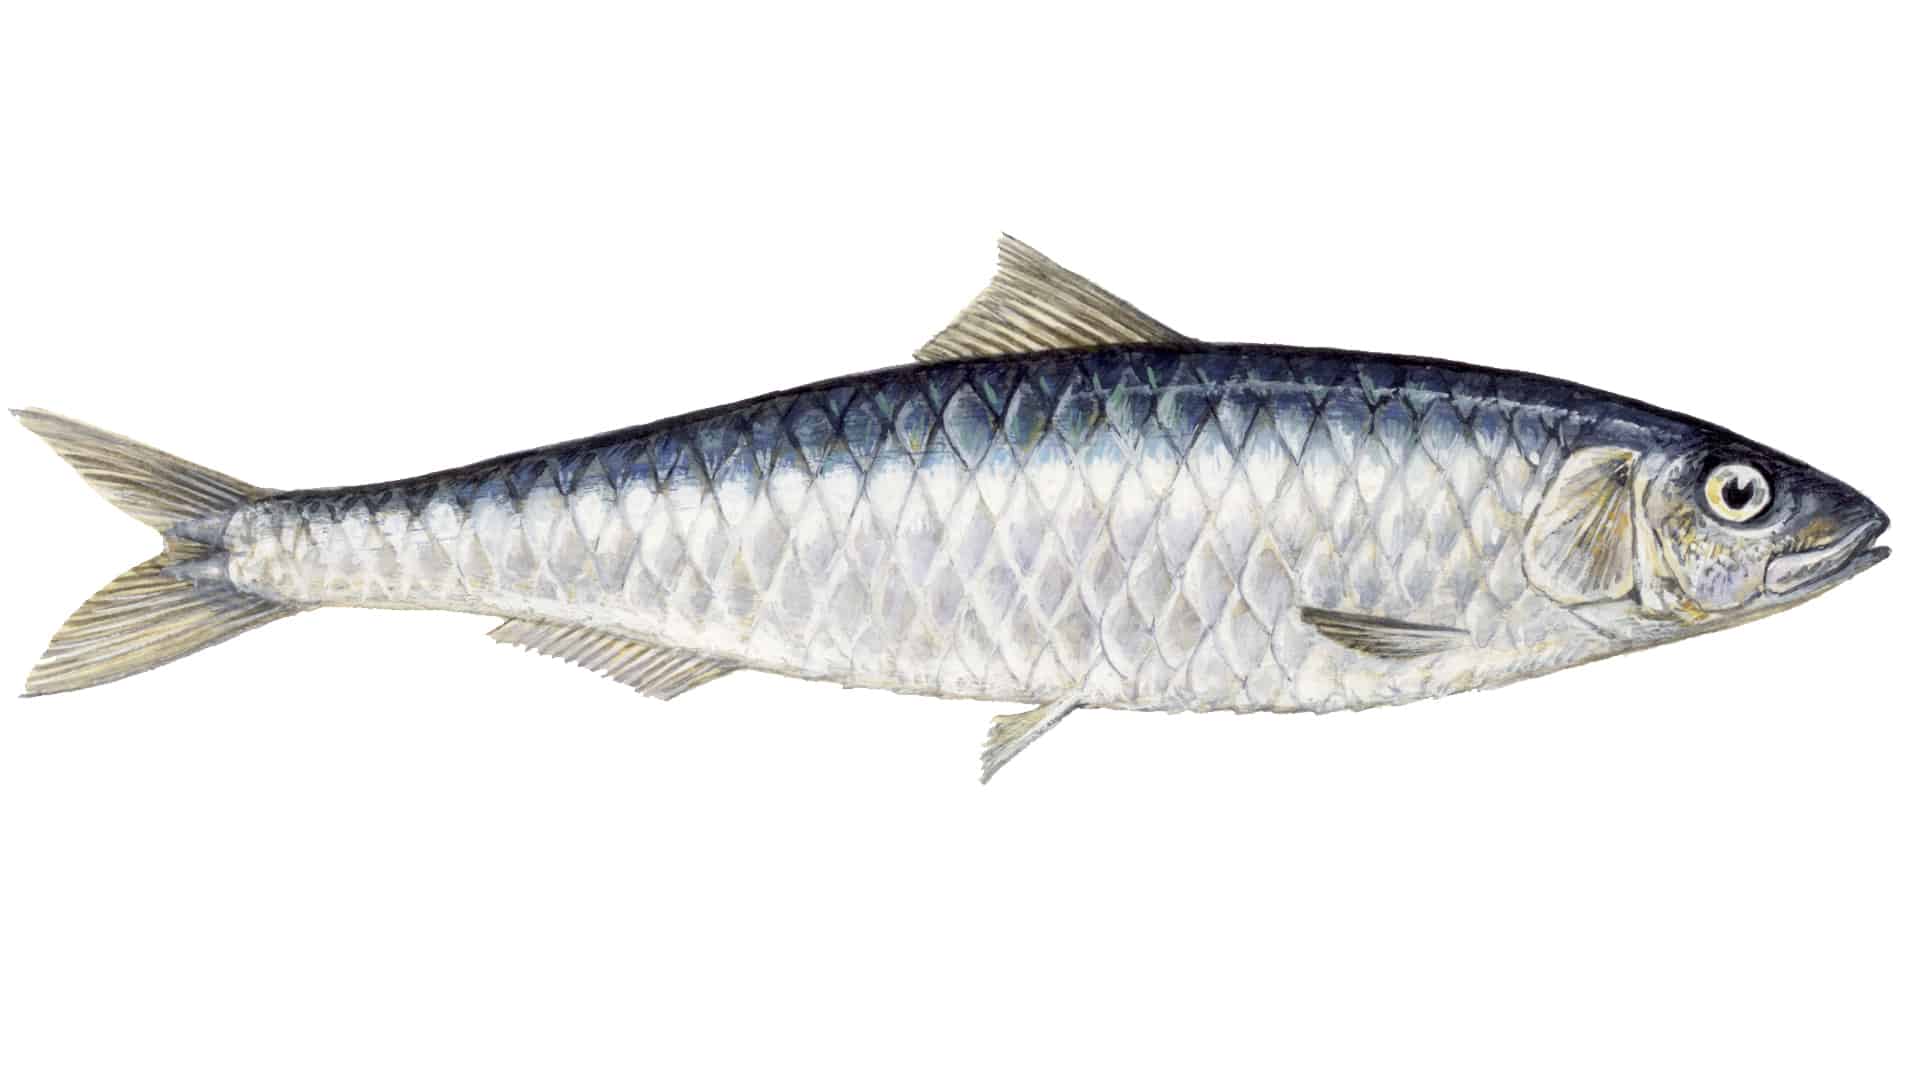 https://www.msc.org/images/default-source/msc-english/content-banner/fish-to-eat/sardine.jpg?sfvrsn=8f6e89ac_7